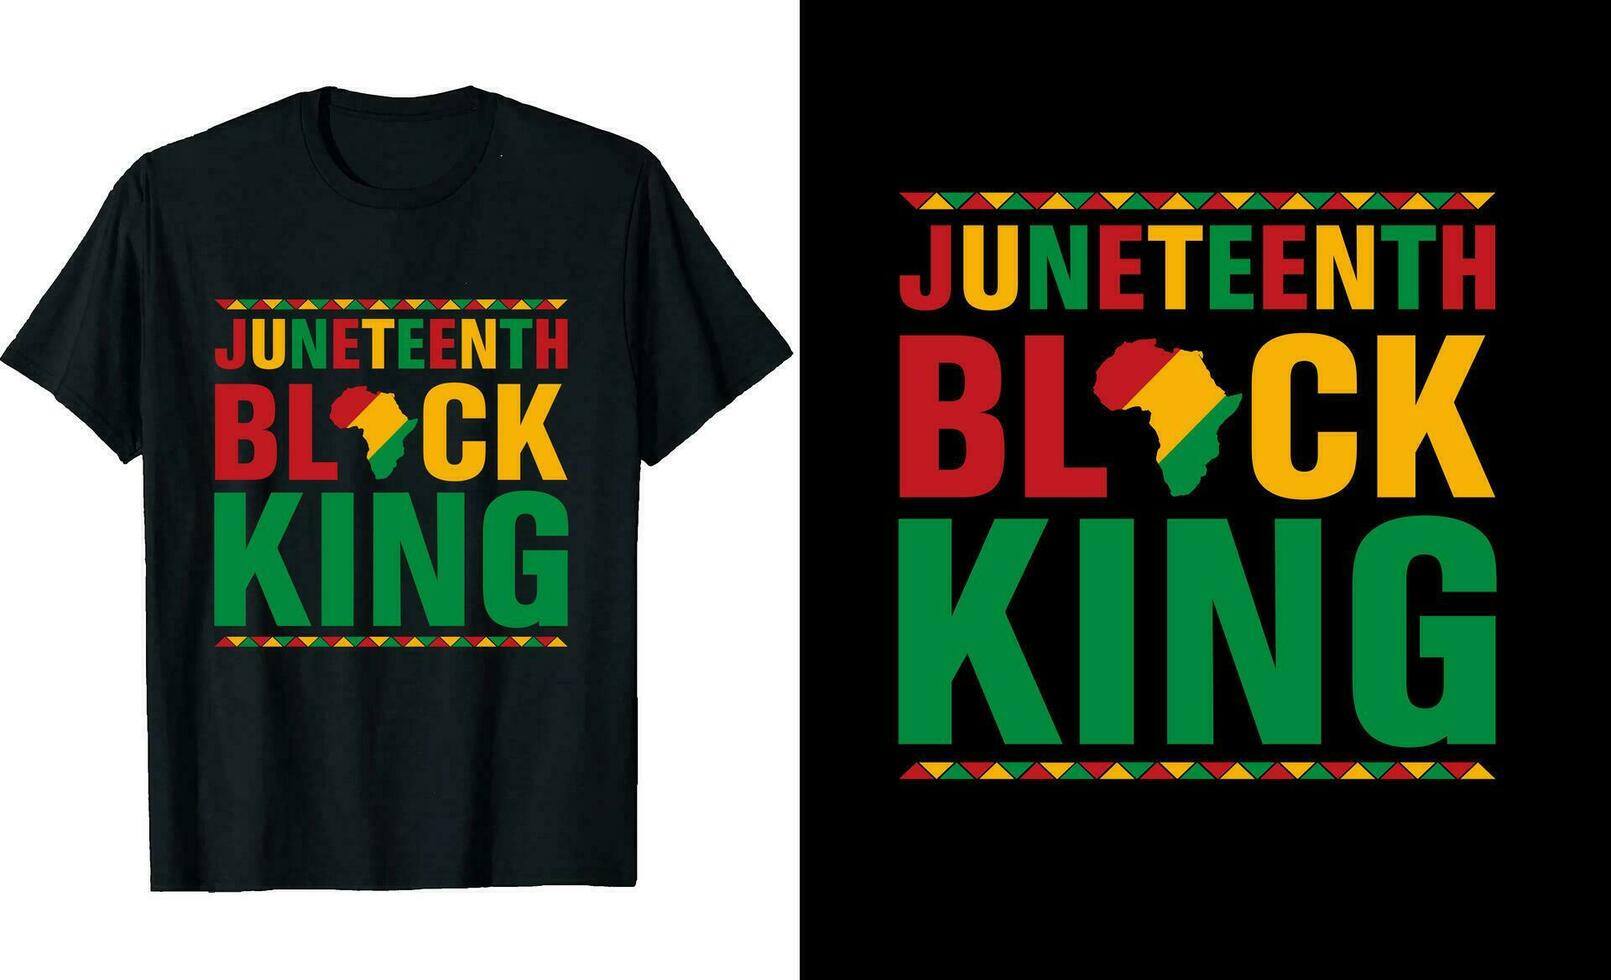 juneteenth t overhemd ontwerp of vieren zwart vrijheid dag t overhemd ontwerp of zwart geschiedenis t overhemd ontwerp vector